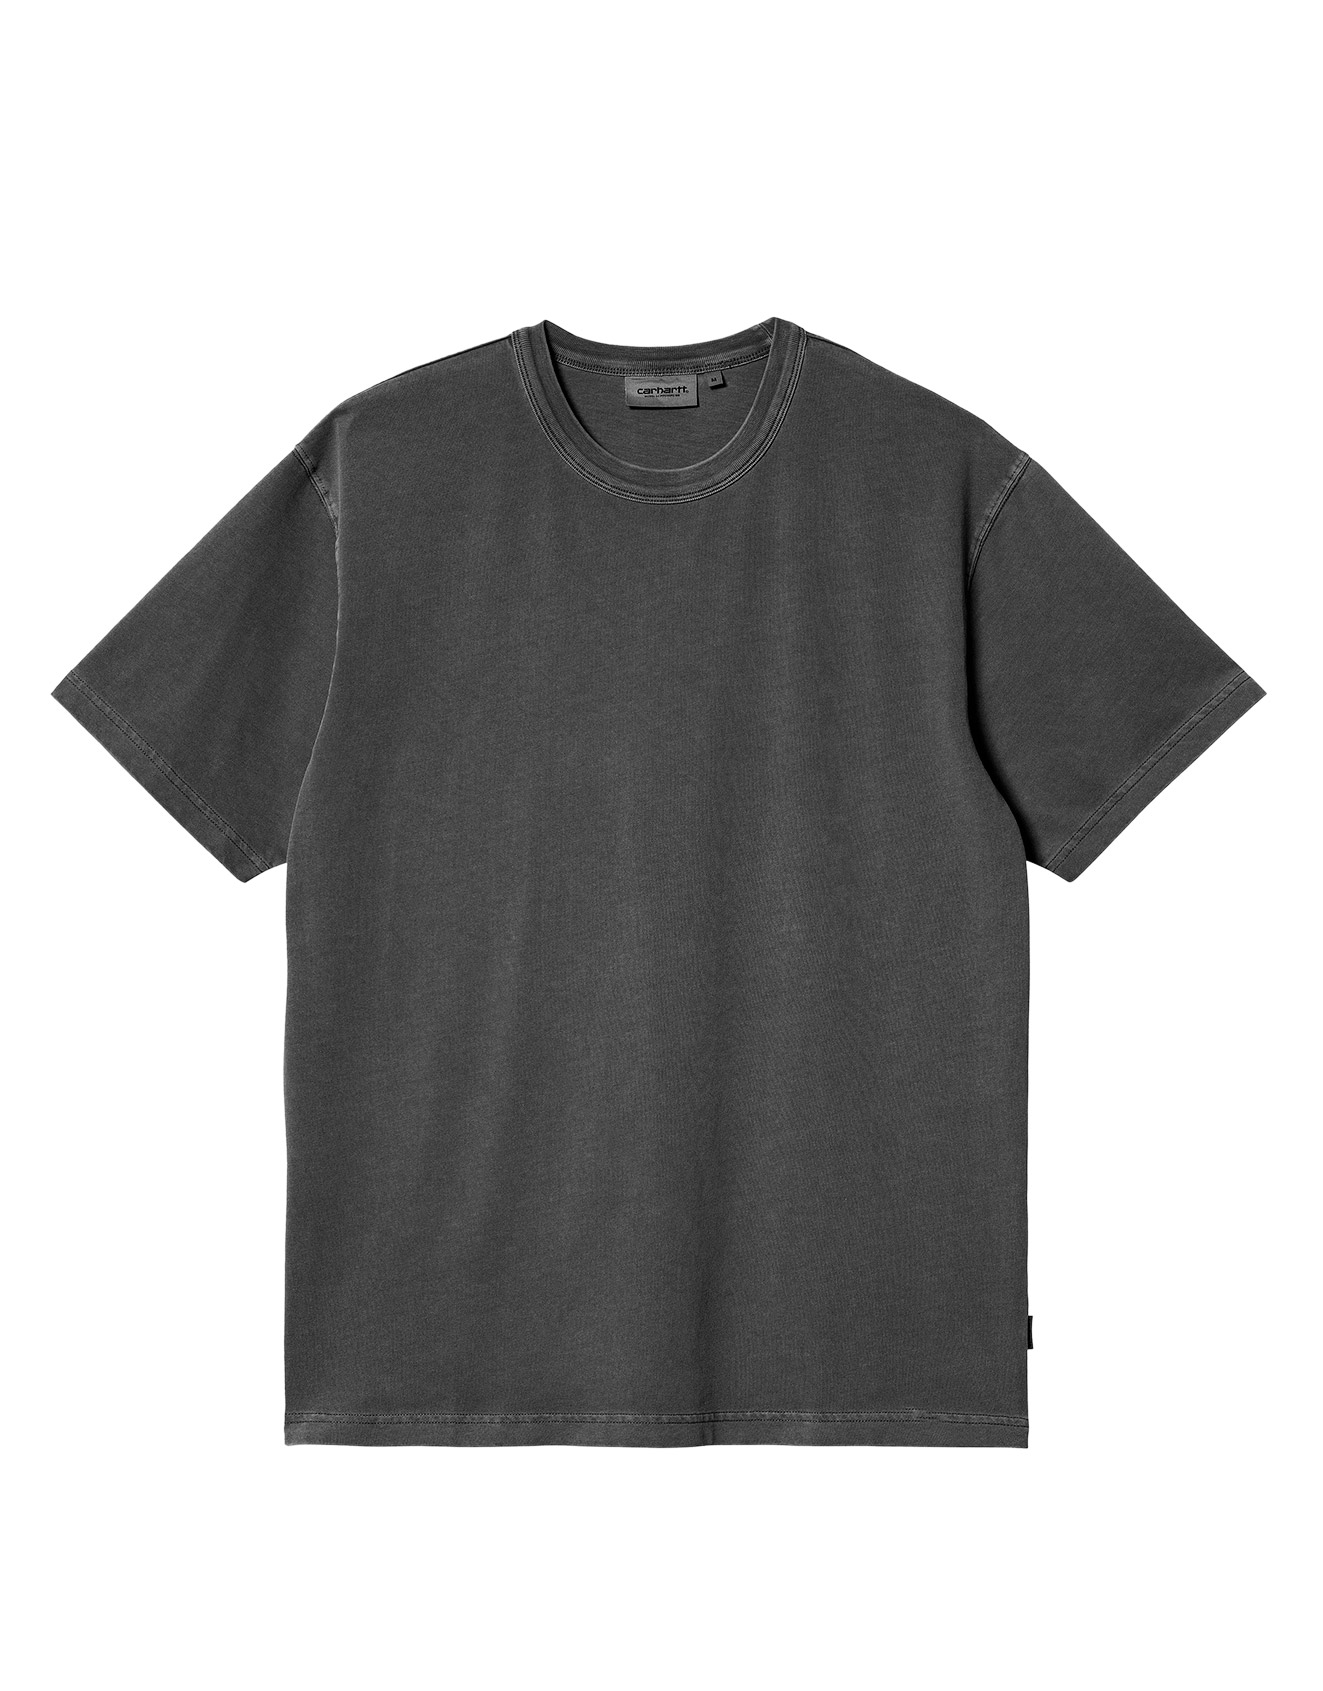 Carhartt WIP – S/S Taos T-Shirt